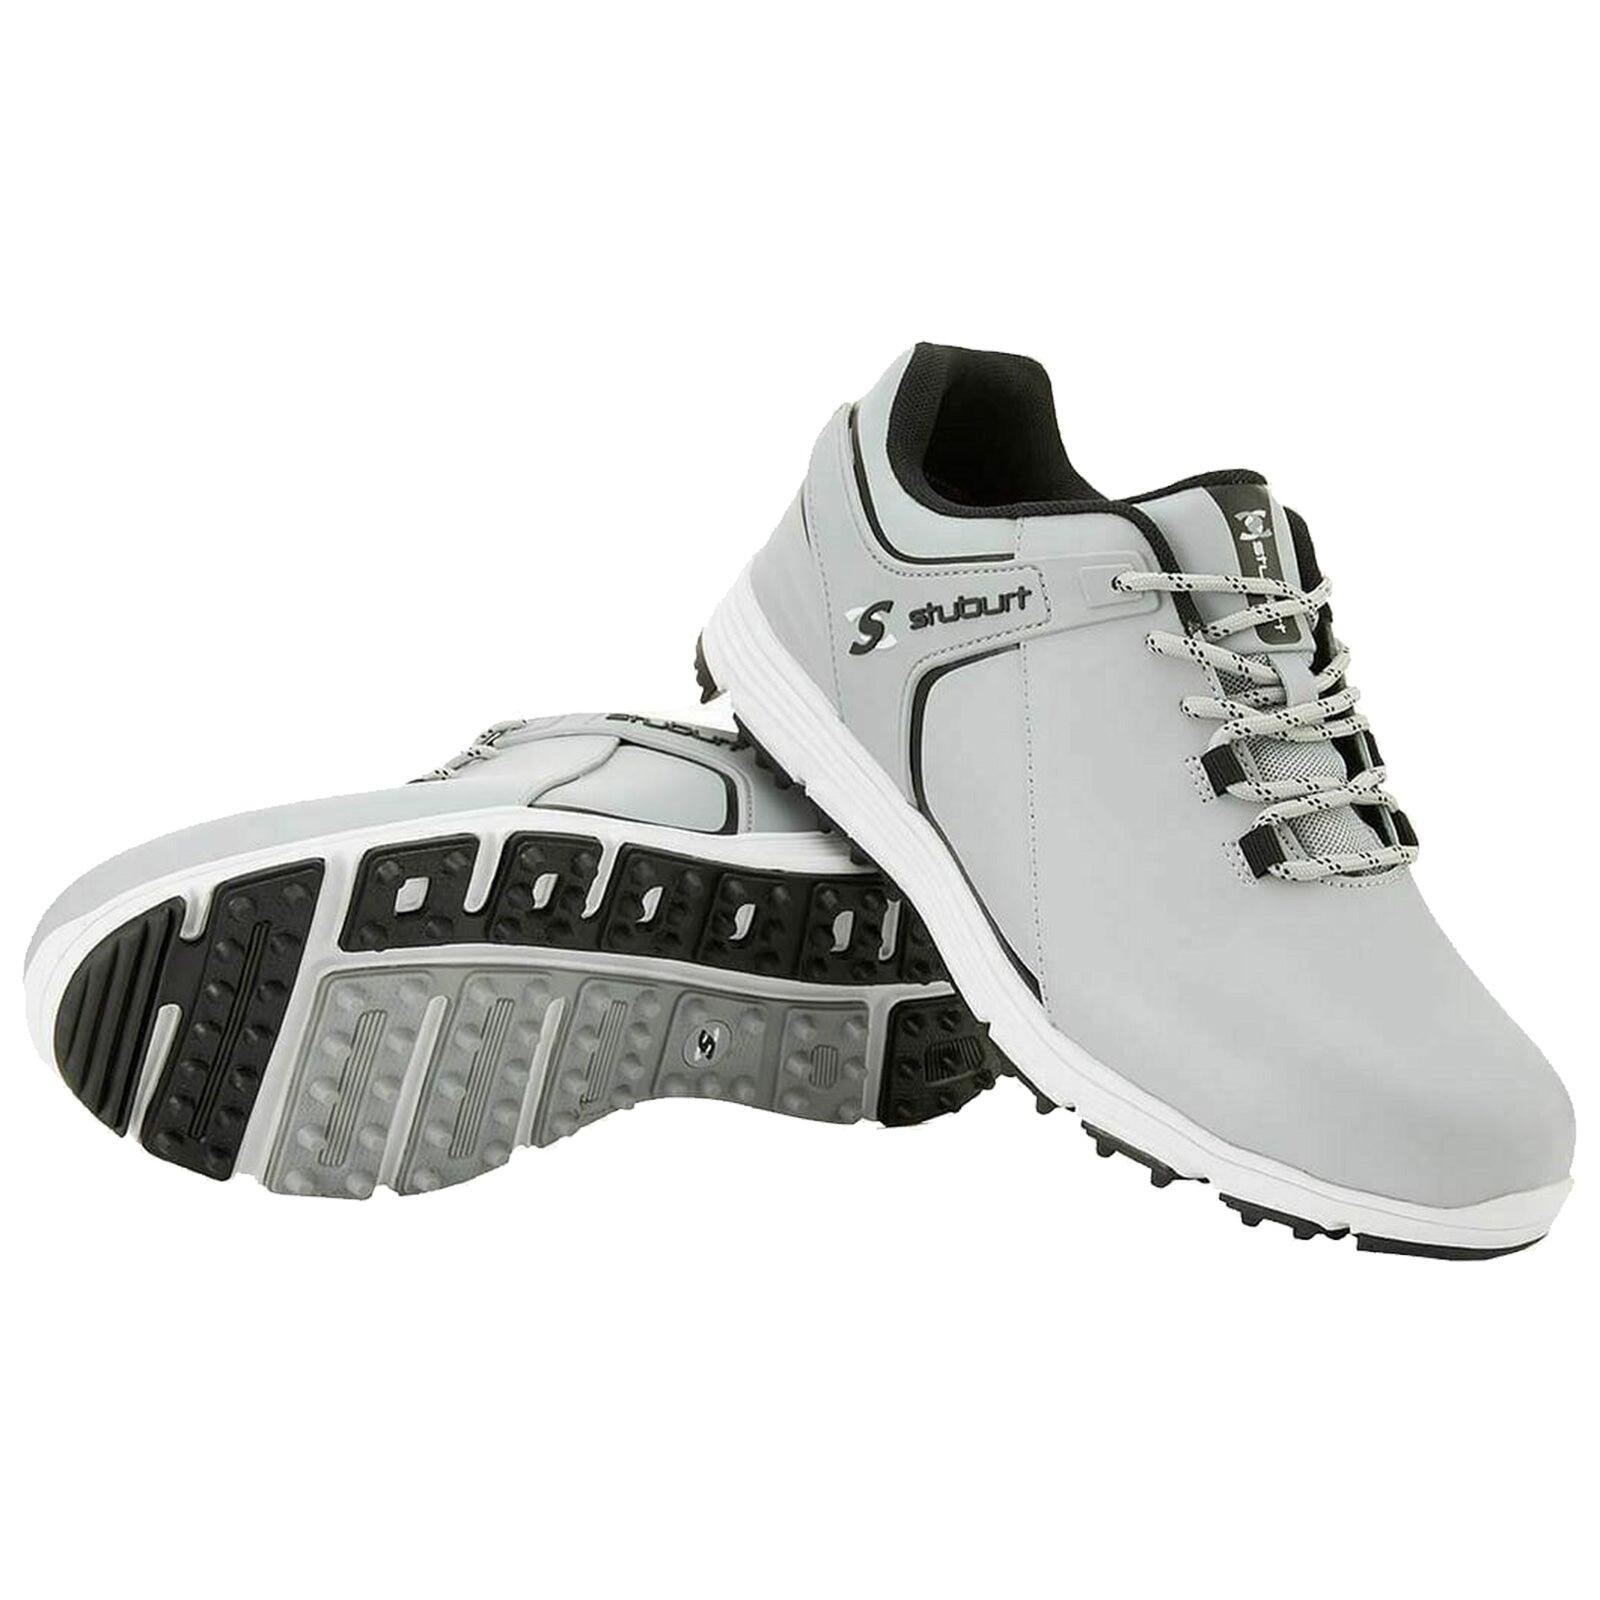 Stuburt Evolve 3.0 Spikeless Golf Shoes - White 4/5